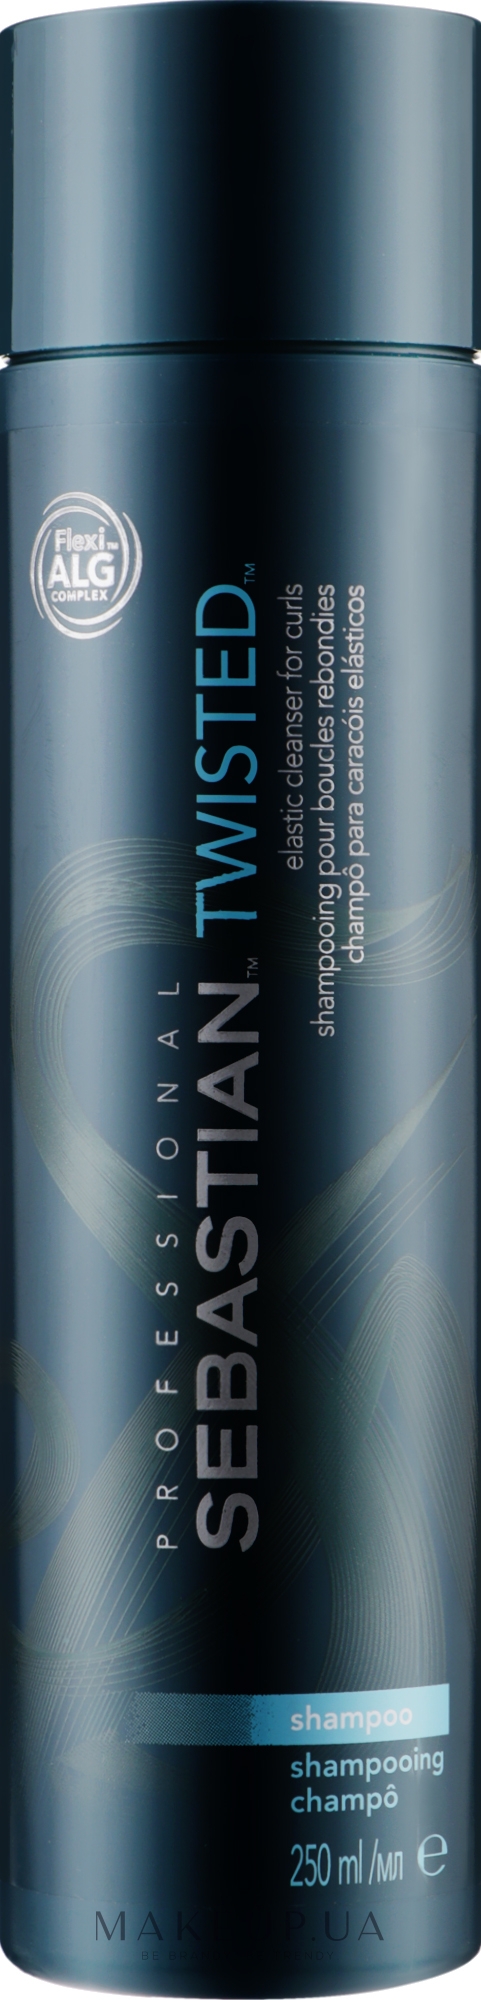 Шампунь для вьющихся волос - Sebastian Professional Twisted Elastic Cleanser Shampoo — фото 250ml